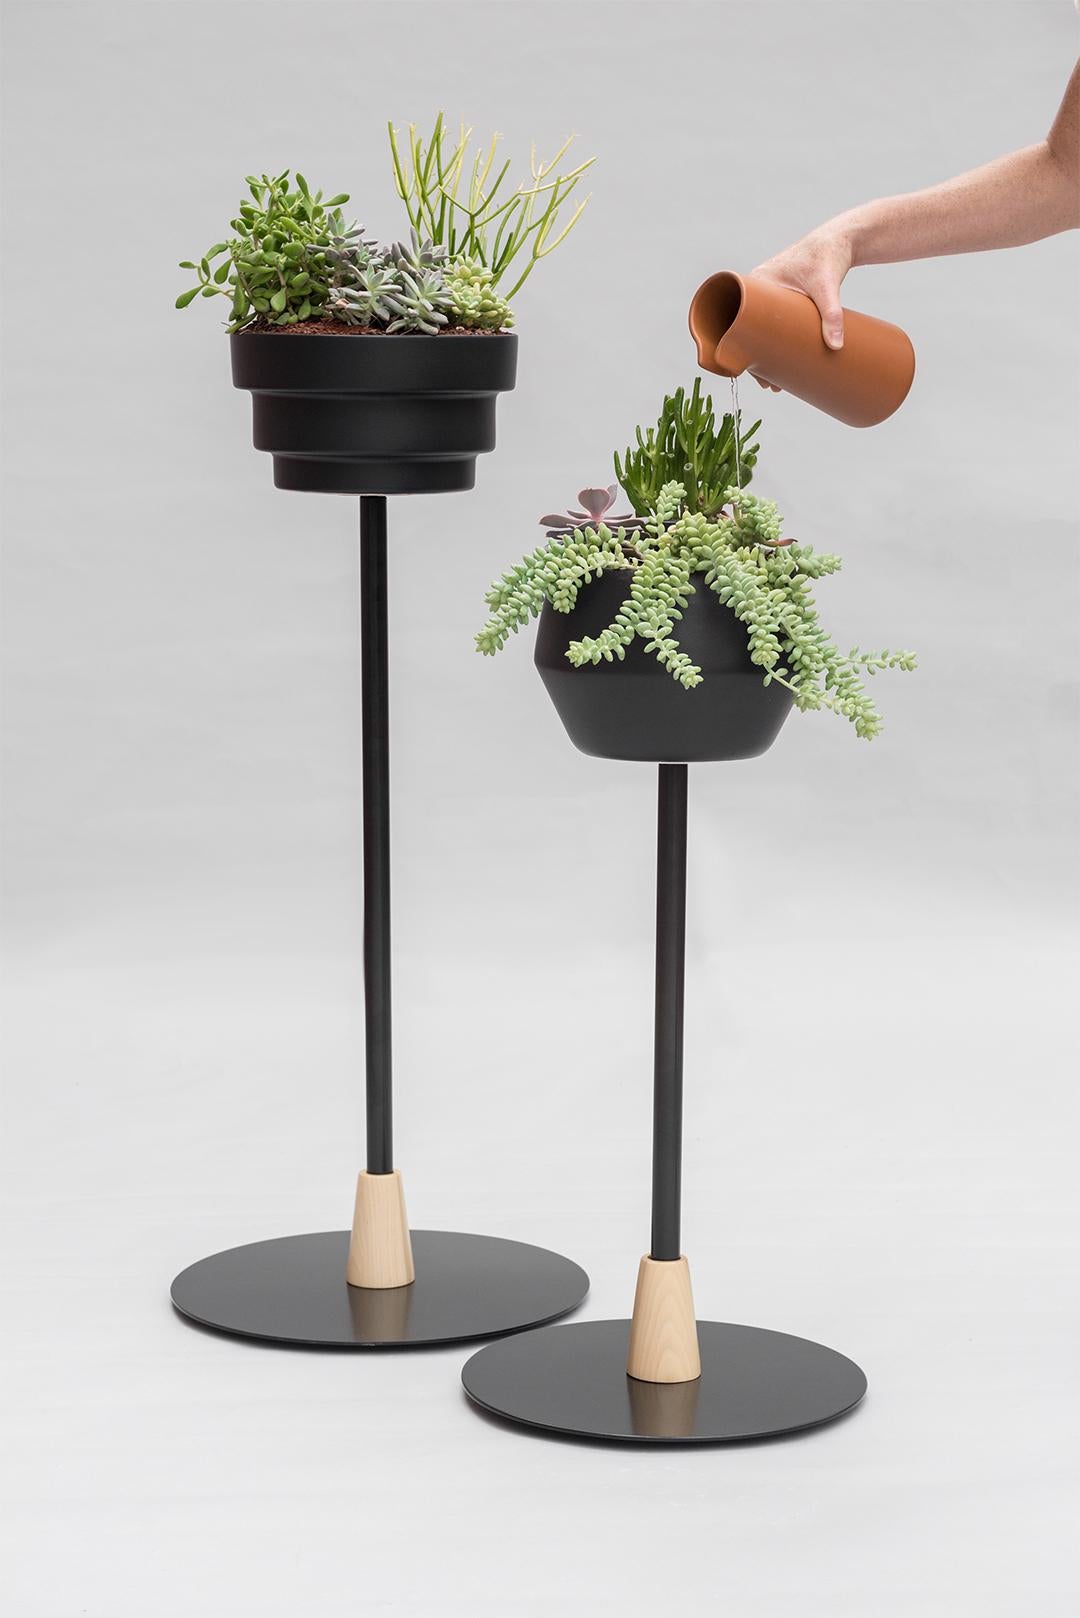 Modern Trinum Small Pedestal with Ceramic Planters, Contemporary Mexican Design Small